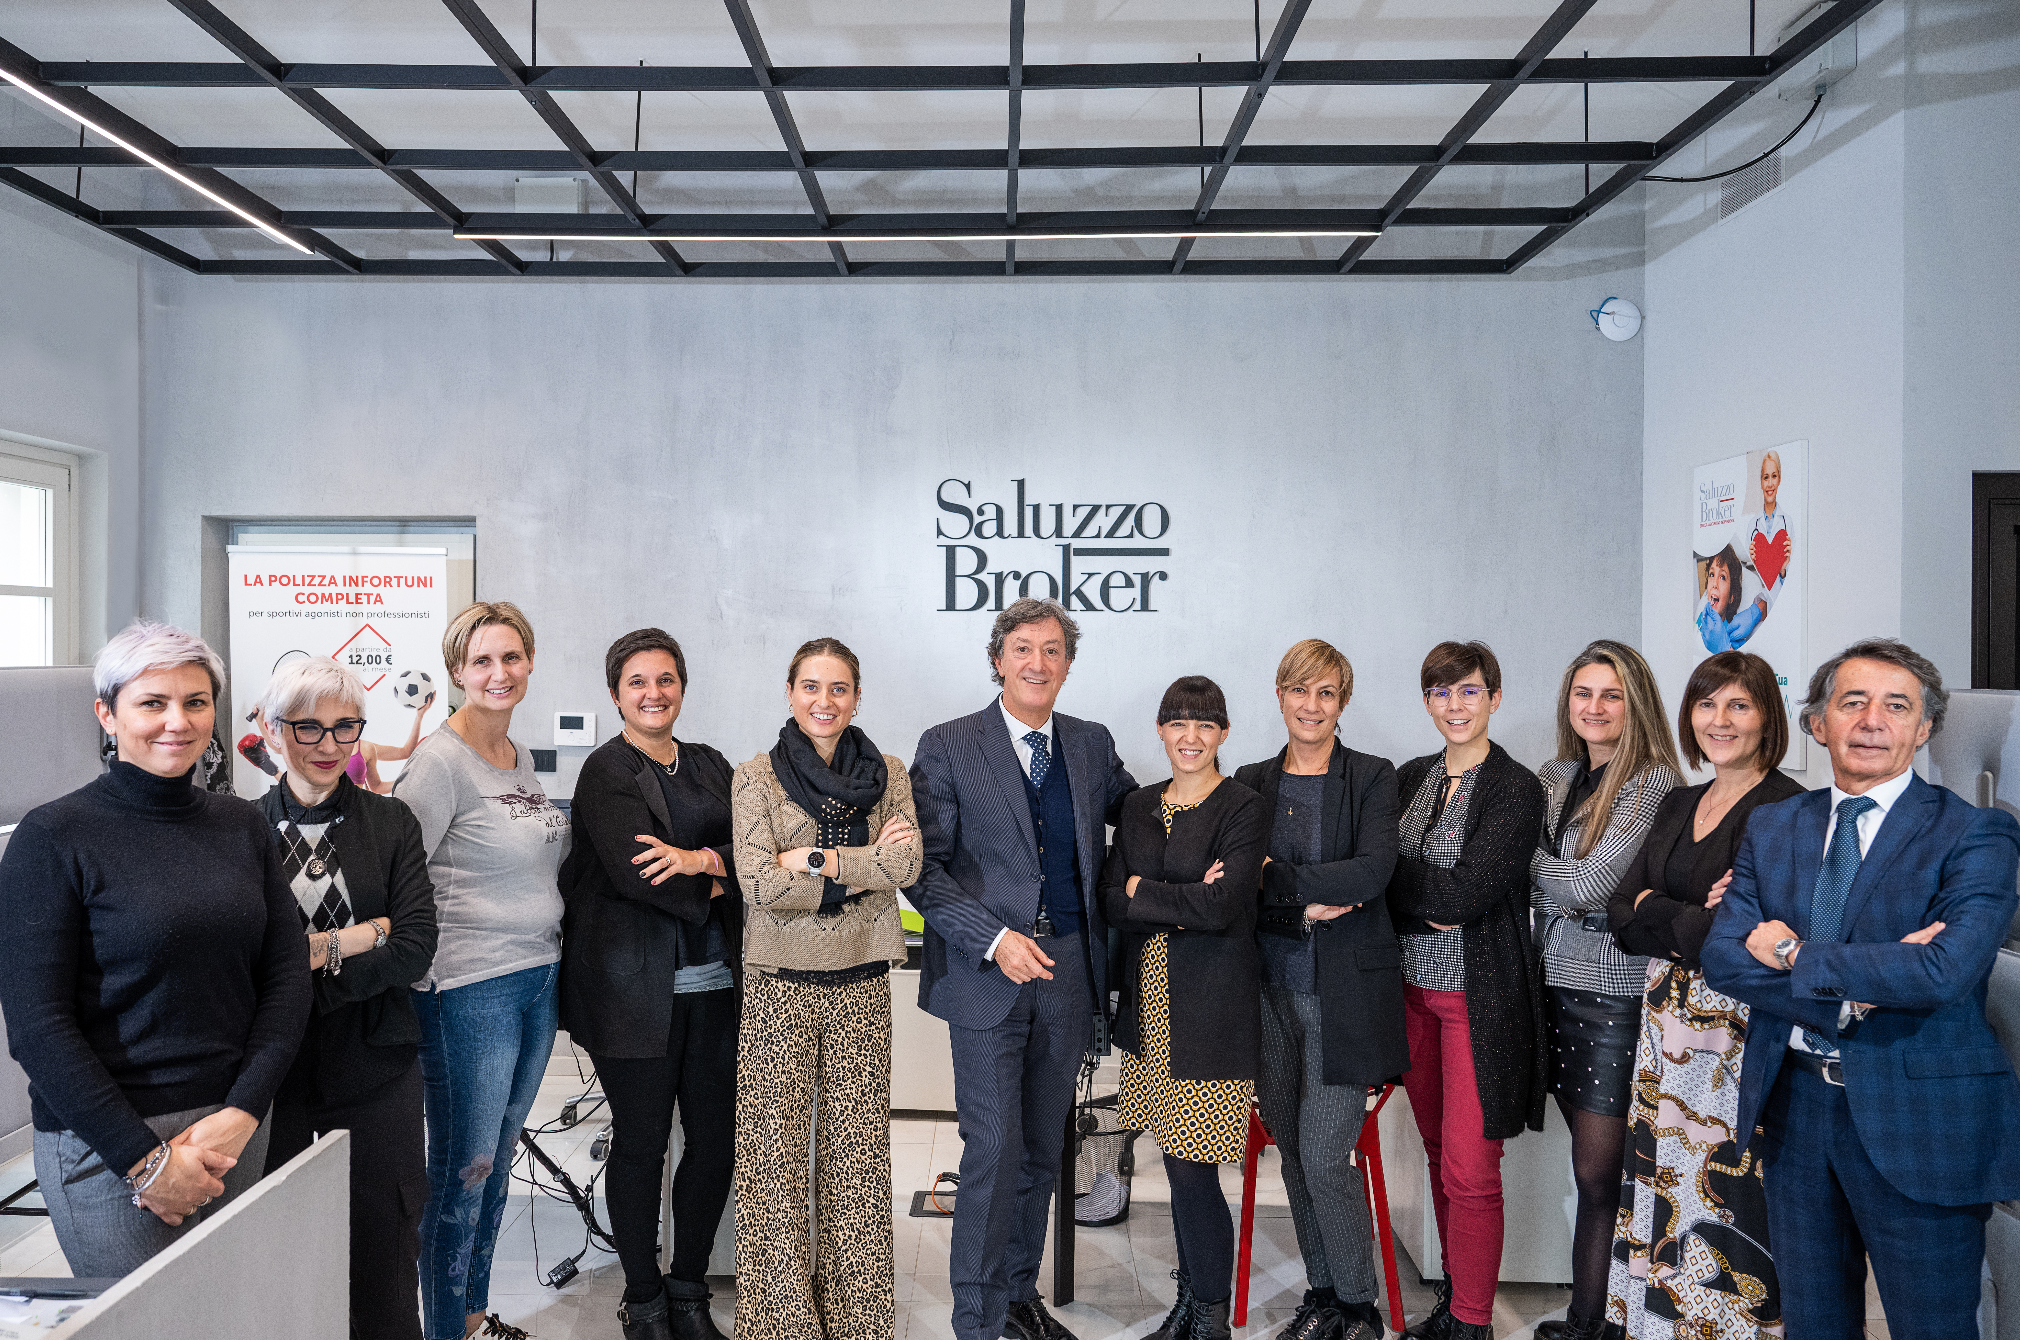 SB saluzzo broker team